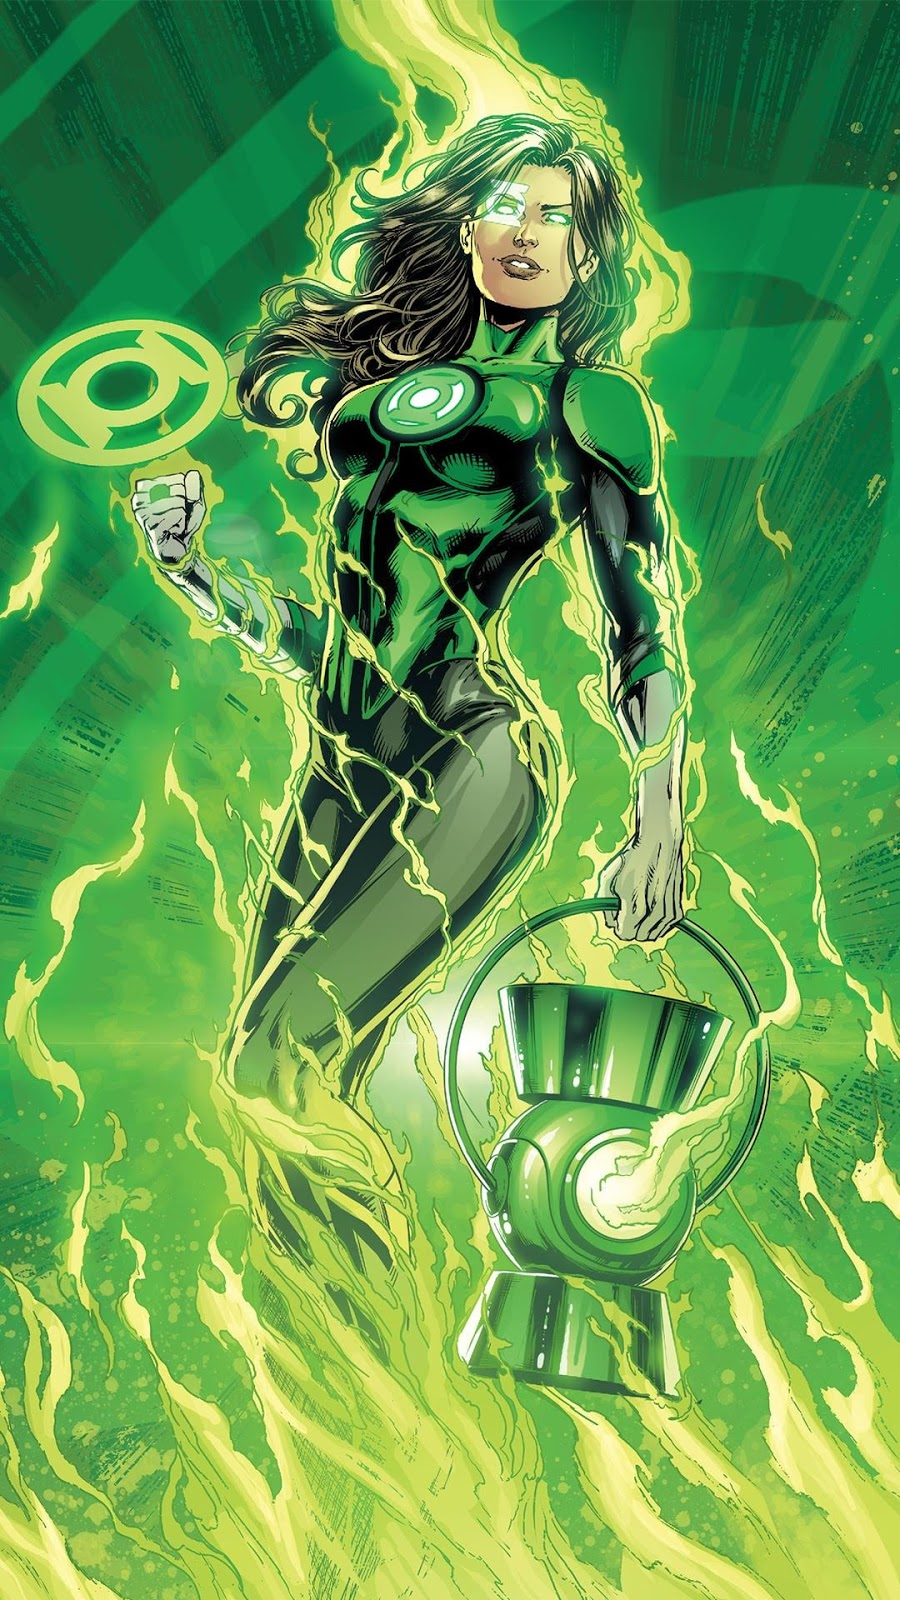 Green Lantern film - Wikipedia